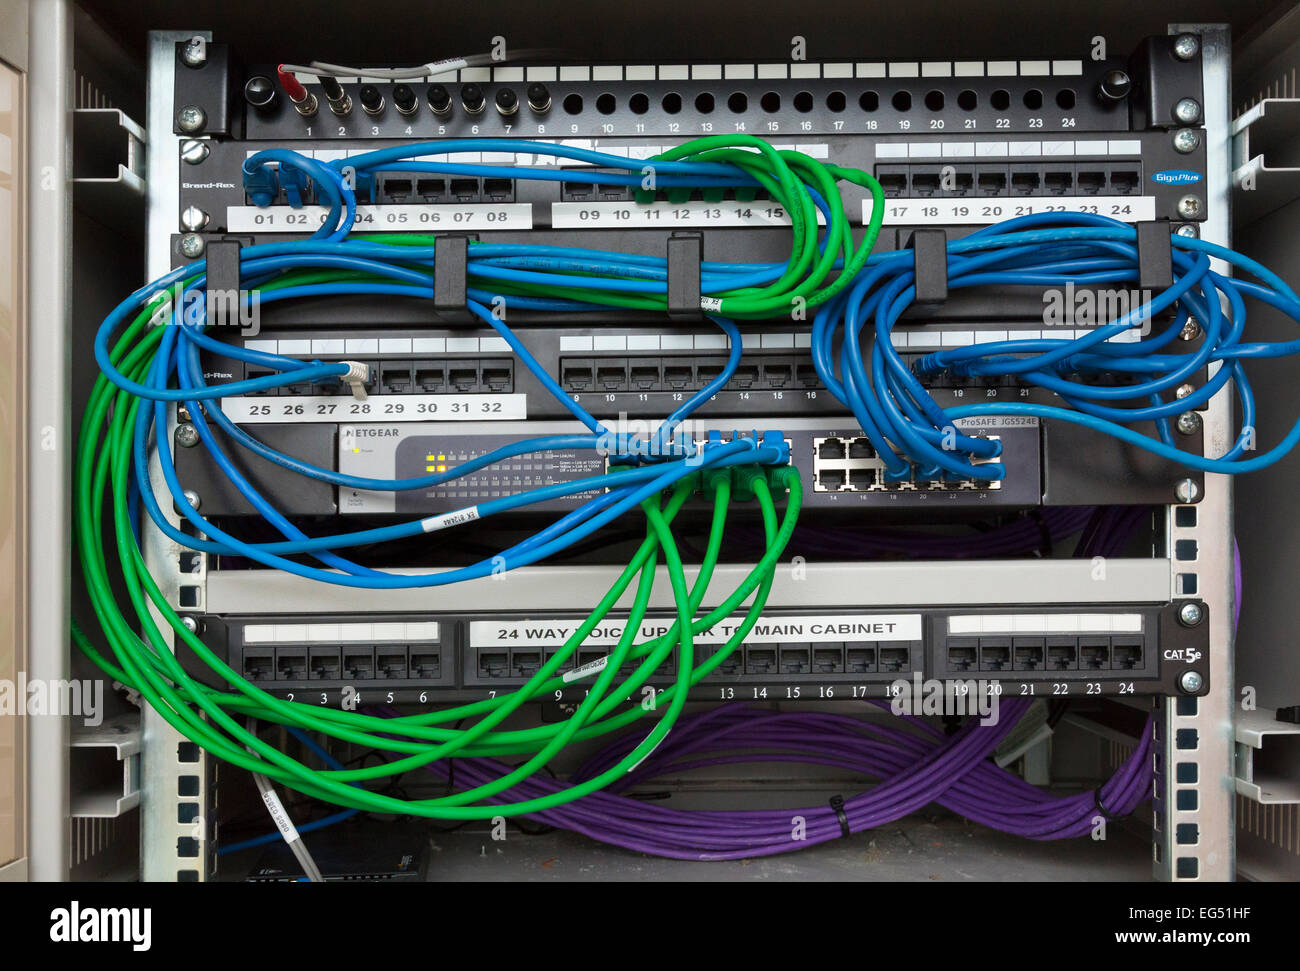 Ethernet-Netzwerk Netgear Schaltschrank Stockfoto